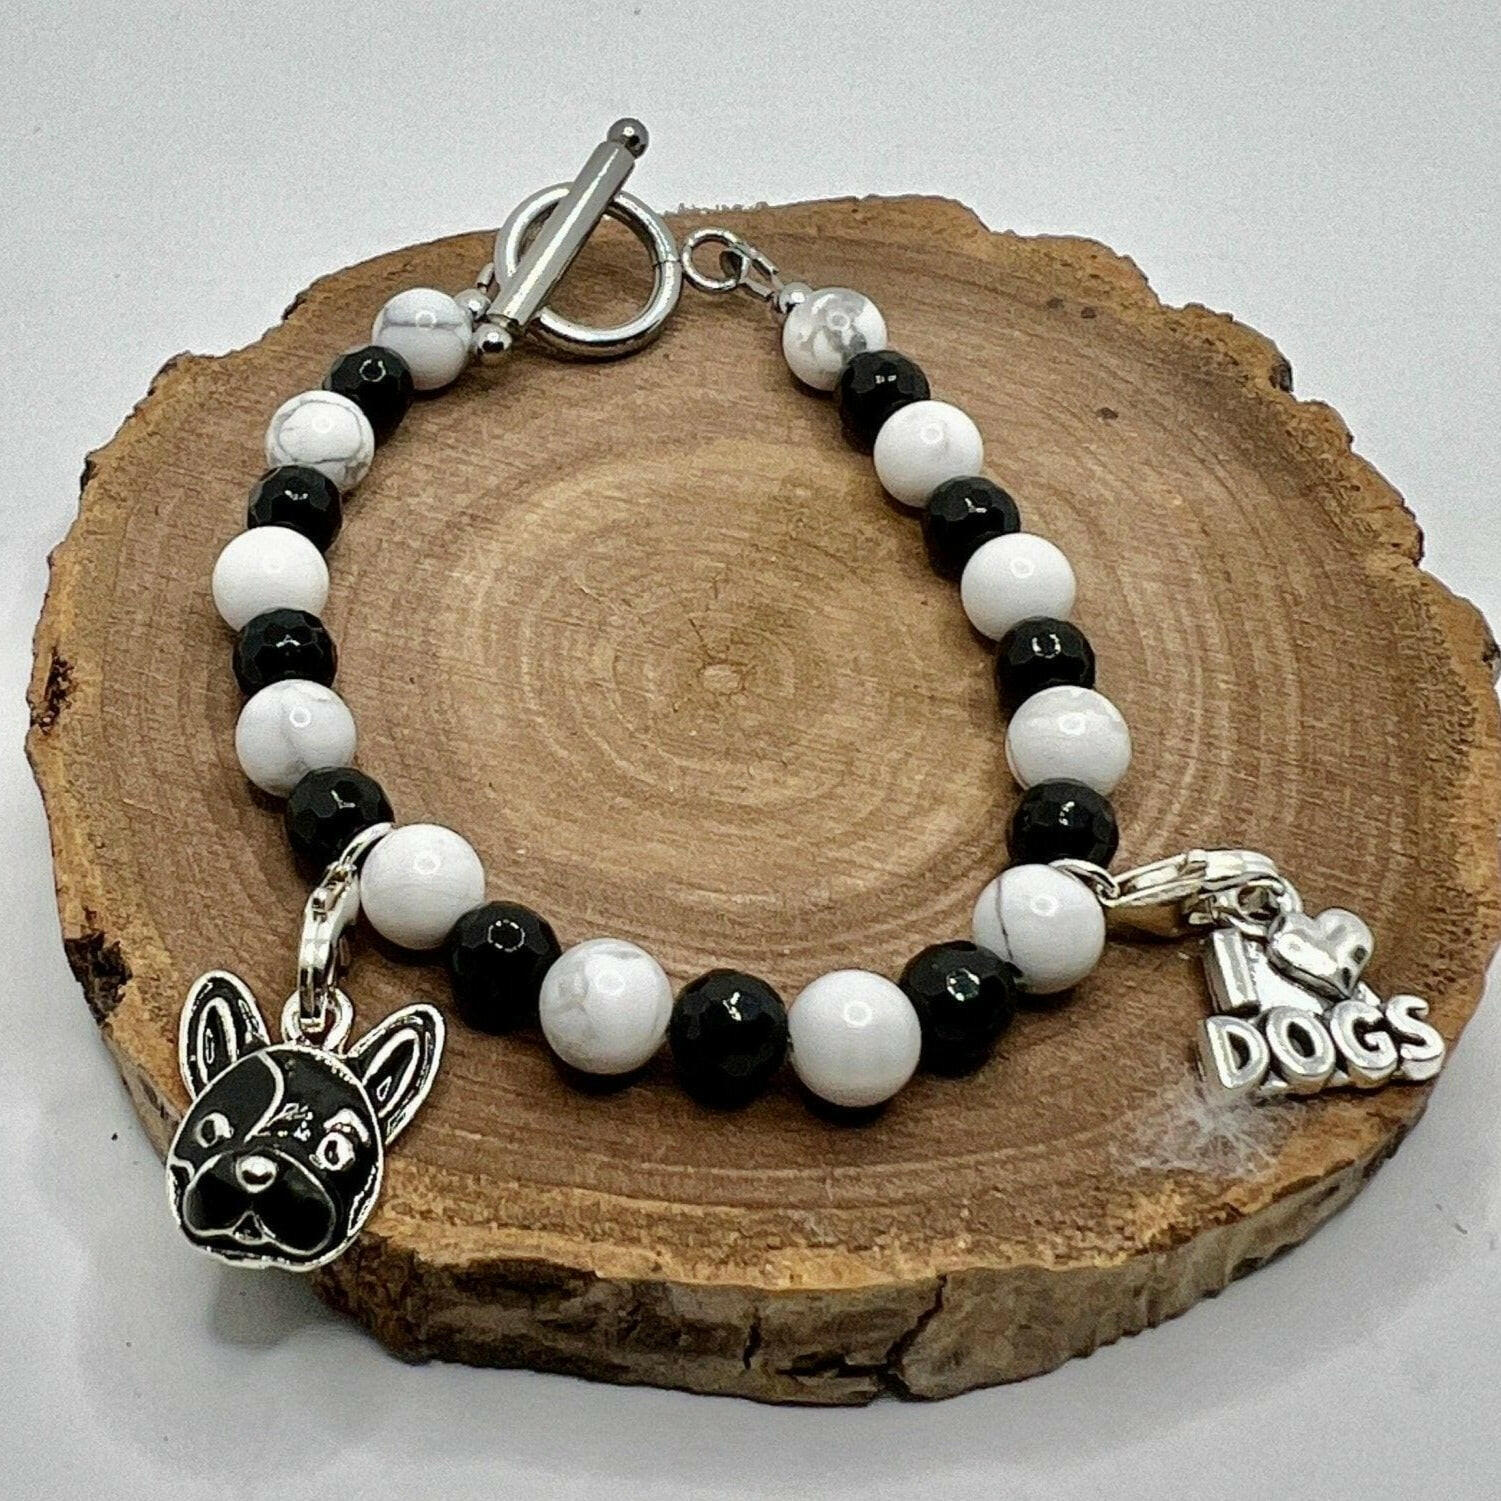 French Bull Dog Charm Onyx Bracelet - Stylish pet-inspired accessory for animal lovers